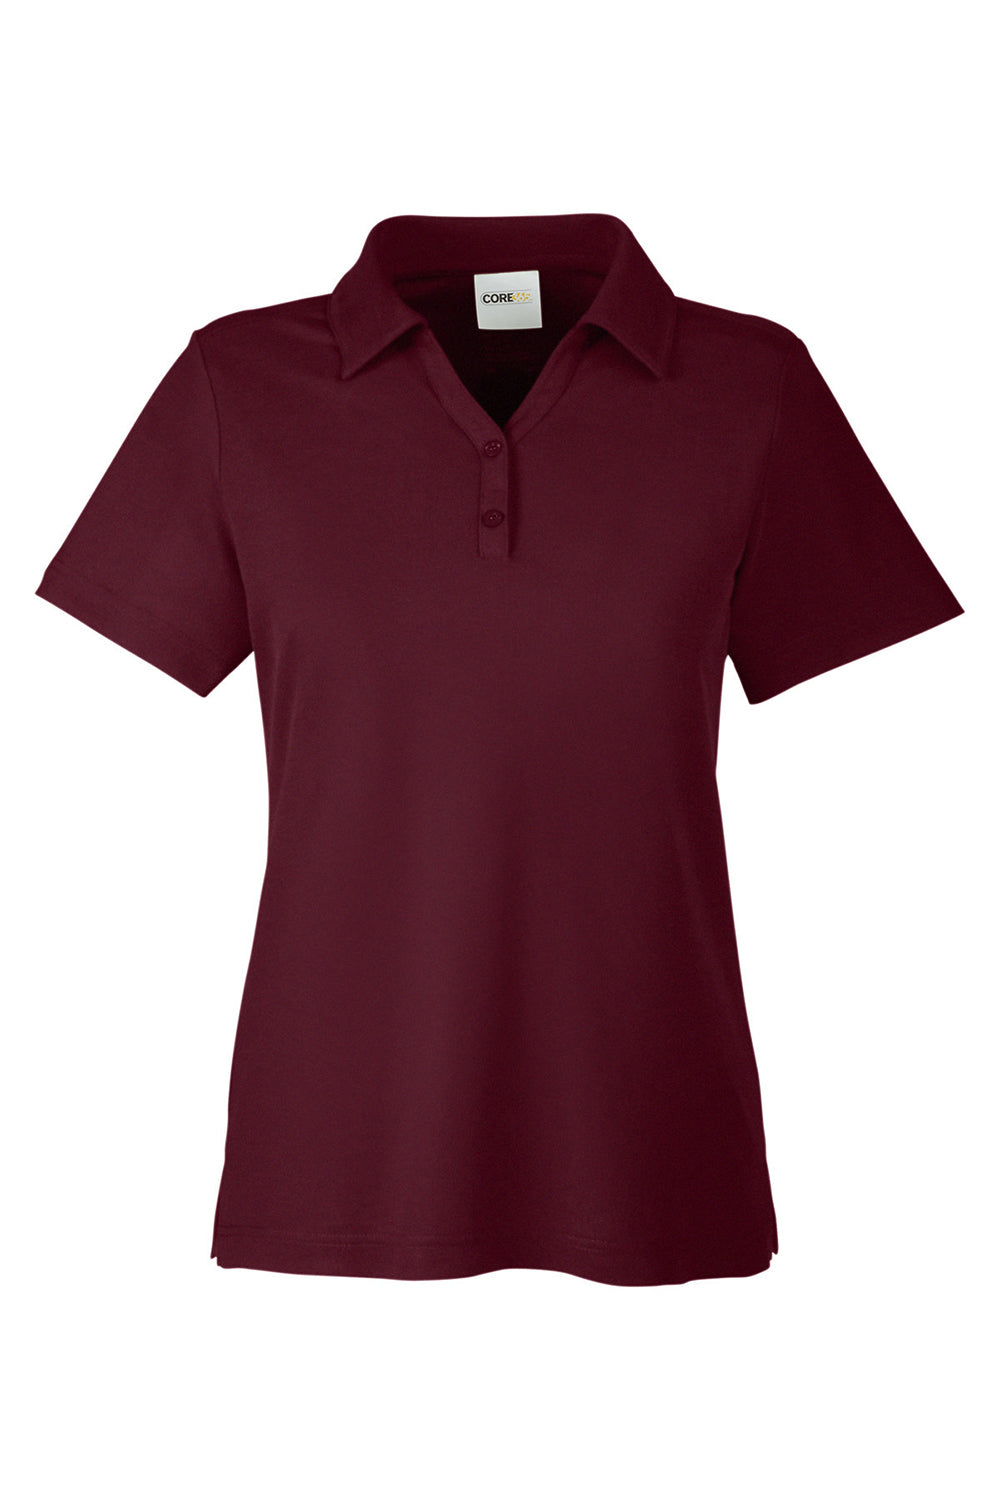 Core 365 CE112W Womens Fusion ChromaSoft Performance Moisture Wicking Pique Short Sleeve Polo Shirt Burgundy Flat Front